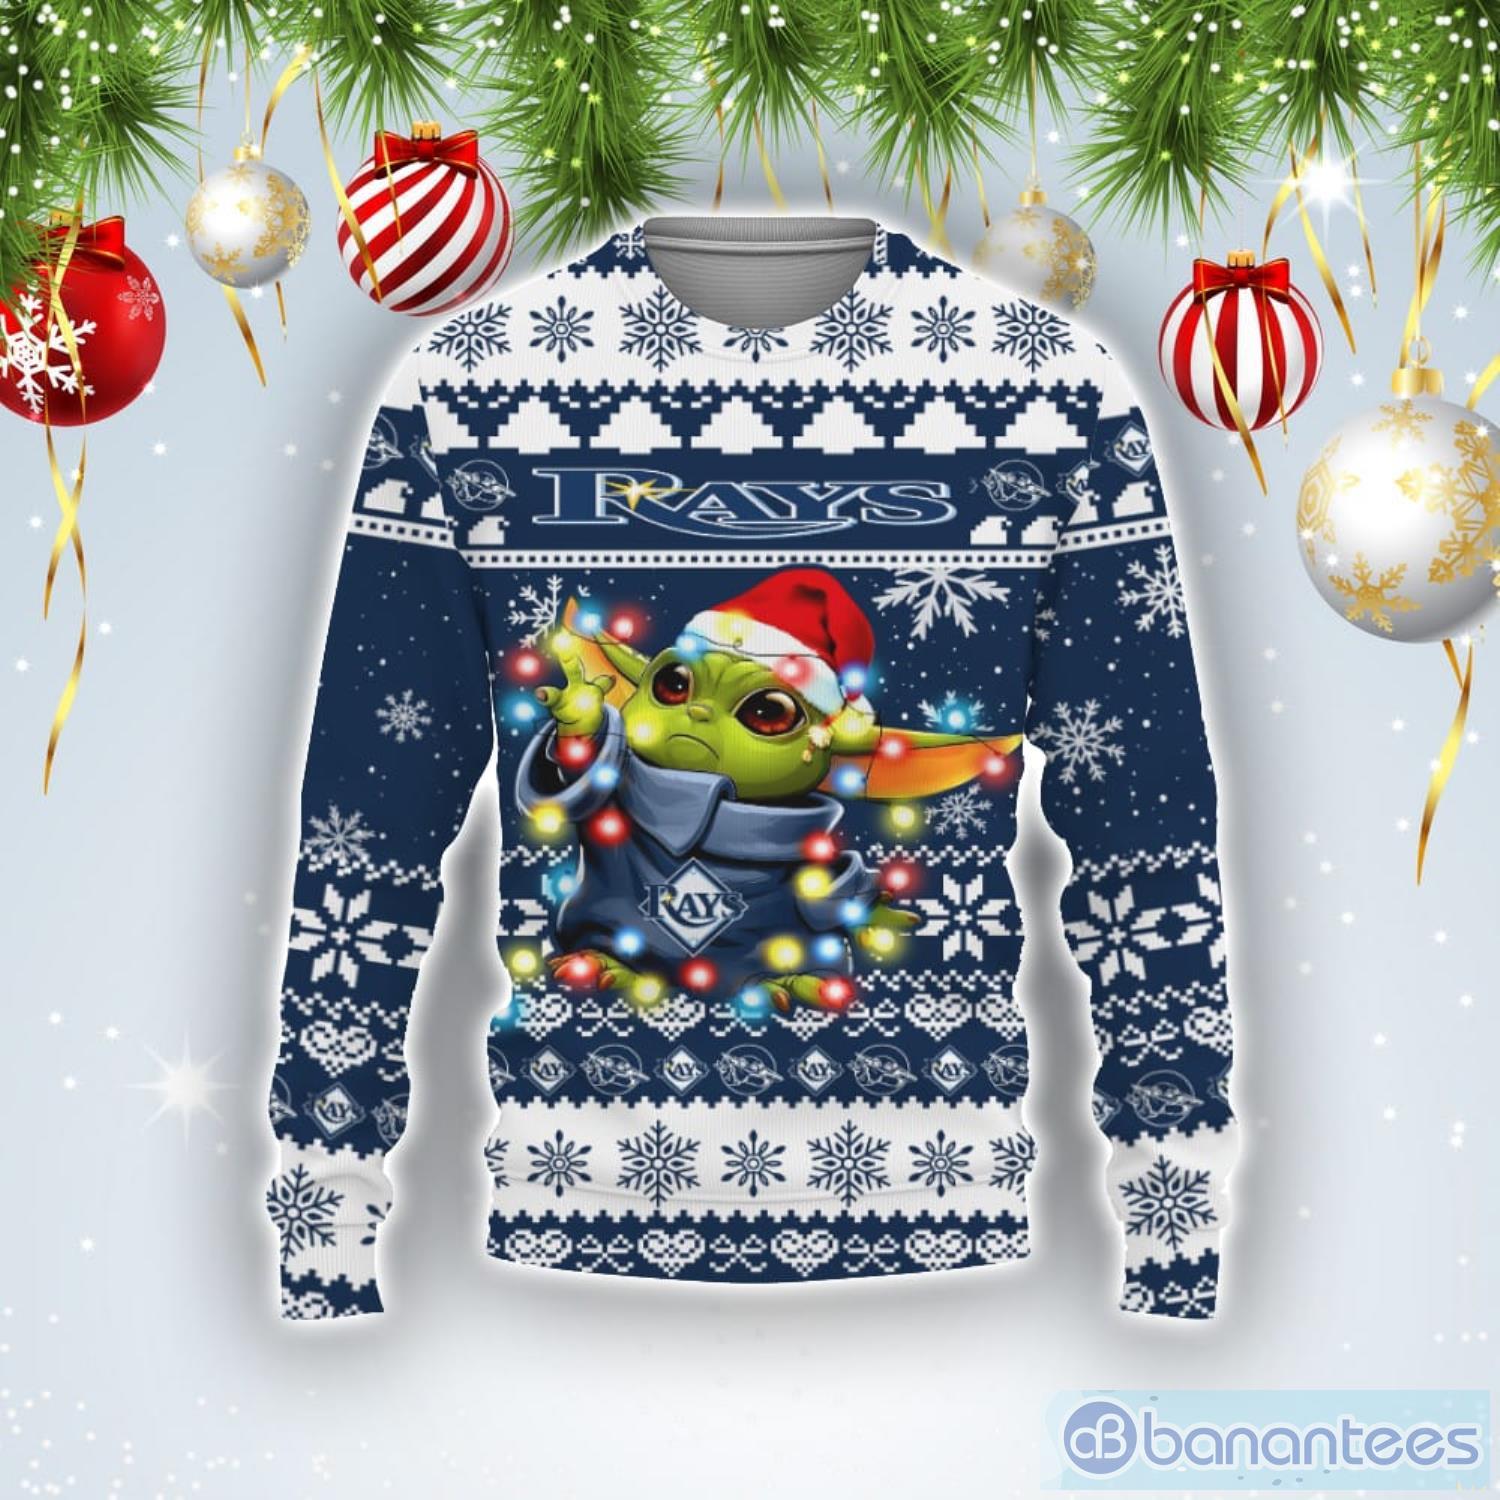 Tampa Bay Rays Baby Yoda Star Wars Sports Football American Ugly Christmas Sweater Product Photo 1